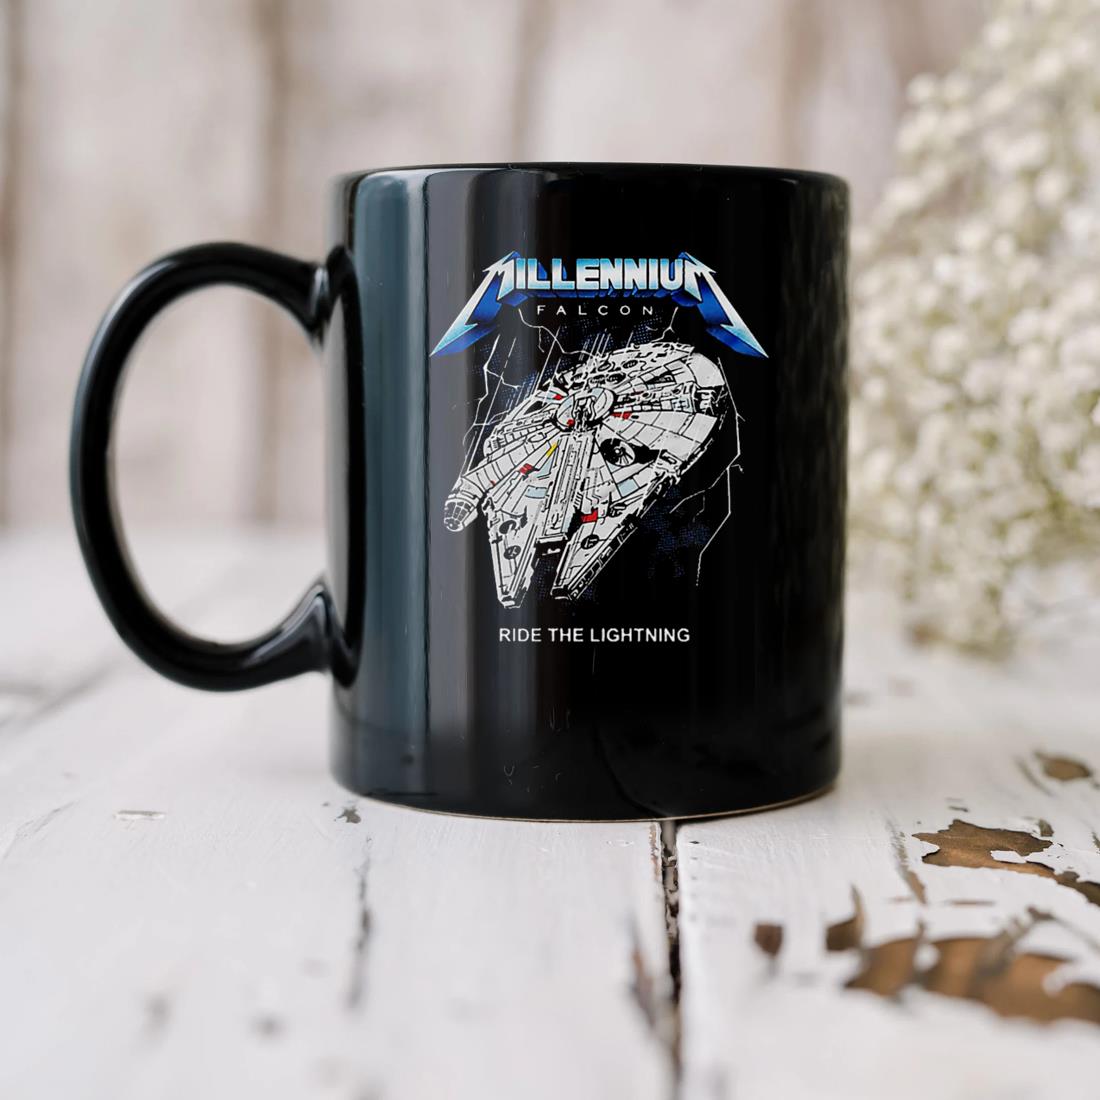 Millennium Falcon Ride The Lightning Mug